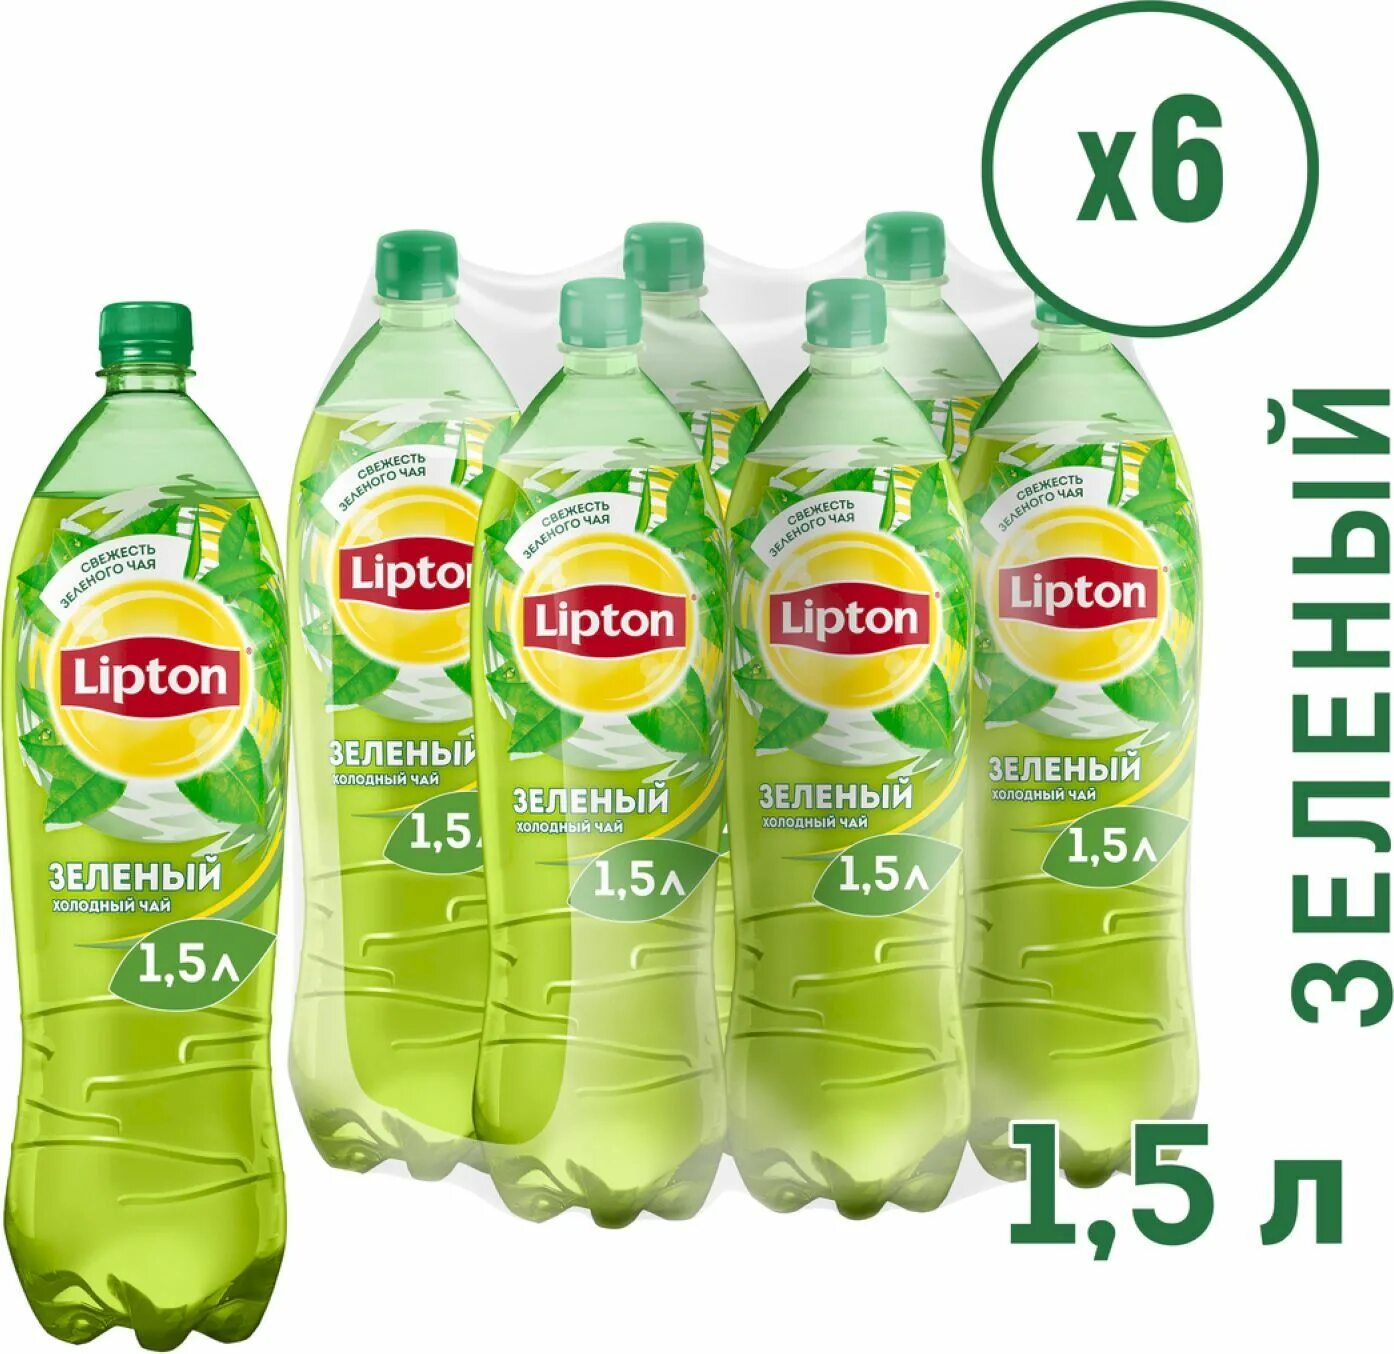 Липтон зелёный холодный чай 1.5. Липтон зеленый чай 1.5. Чай холодный Lipton зелёный чай 1 л. Липтон холодный чай зеленый 0.5.